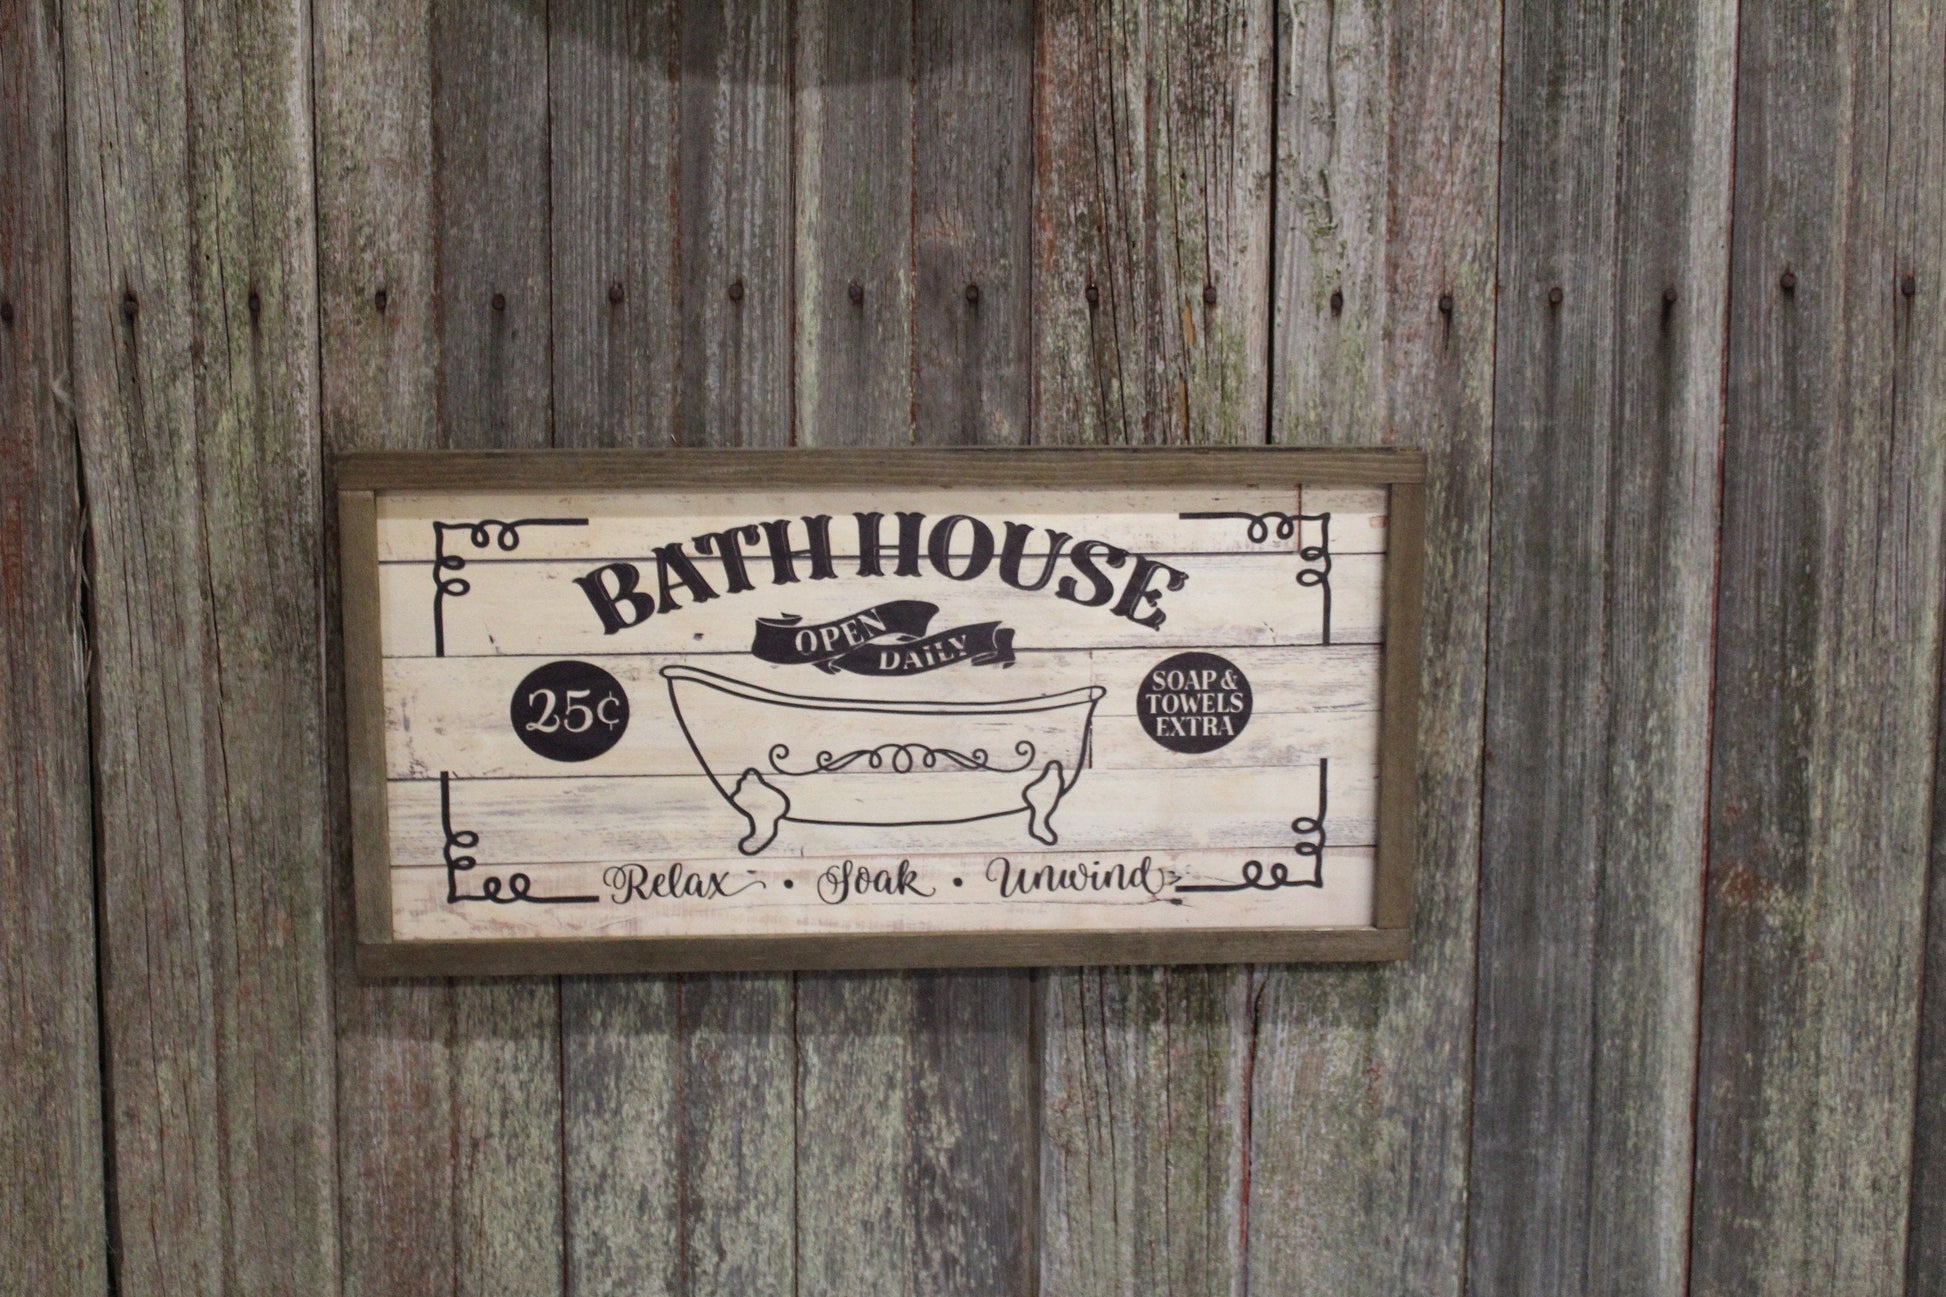 Farmhouse Bath House Bathhouse Tub Wood Sign Claw Foot 25 Cents Shiplap Relax Soak Towels Extra Unwind Framed Wall Art Primitive Rustic